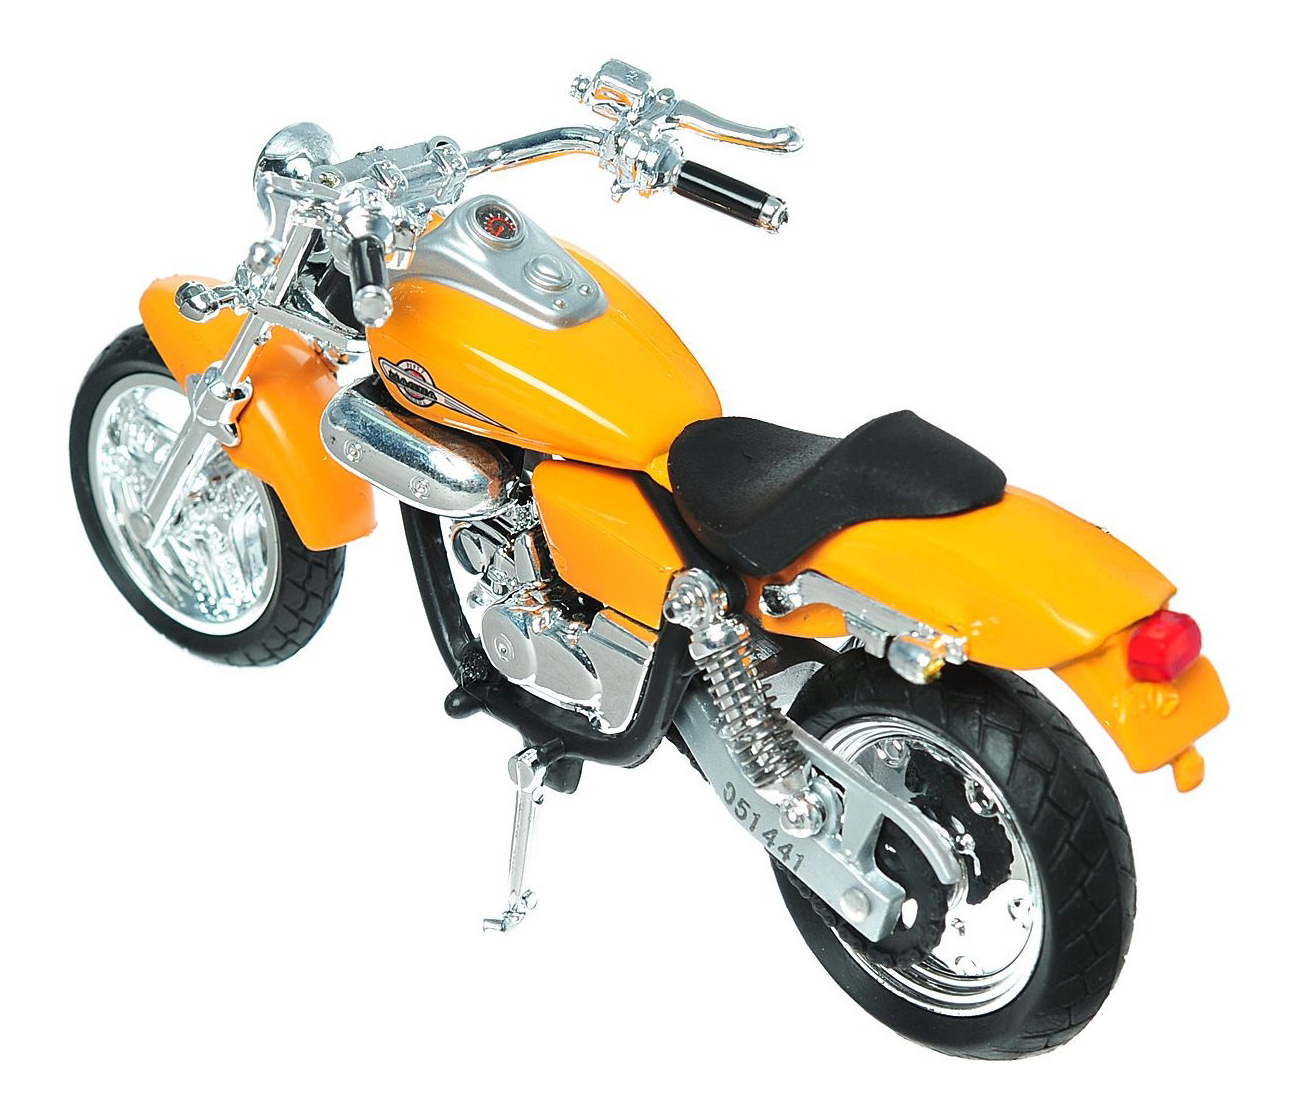 Модель мотоцикла honda. Коллекционная модель мотоцикла Honda Magna. Мотоцикл Хонда Магна желтый. Детский мотоцикл Honda Magna. Мотоцикл Хонда маленький мотик.